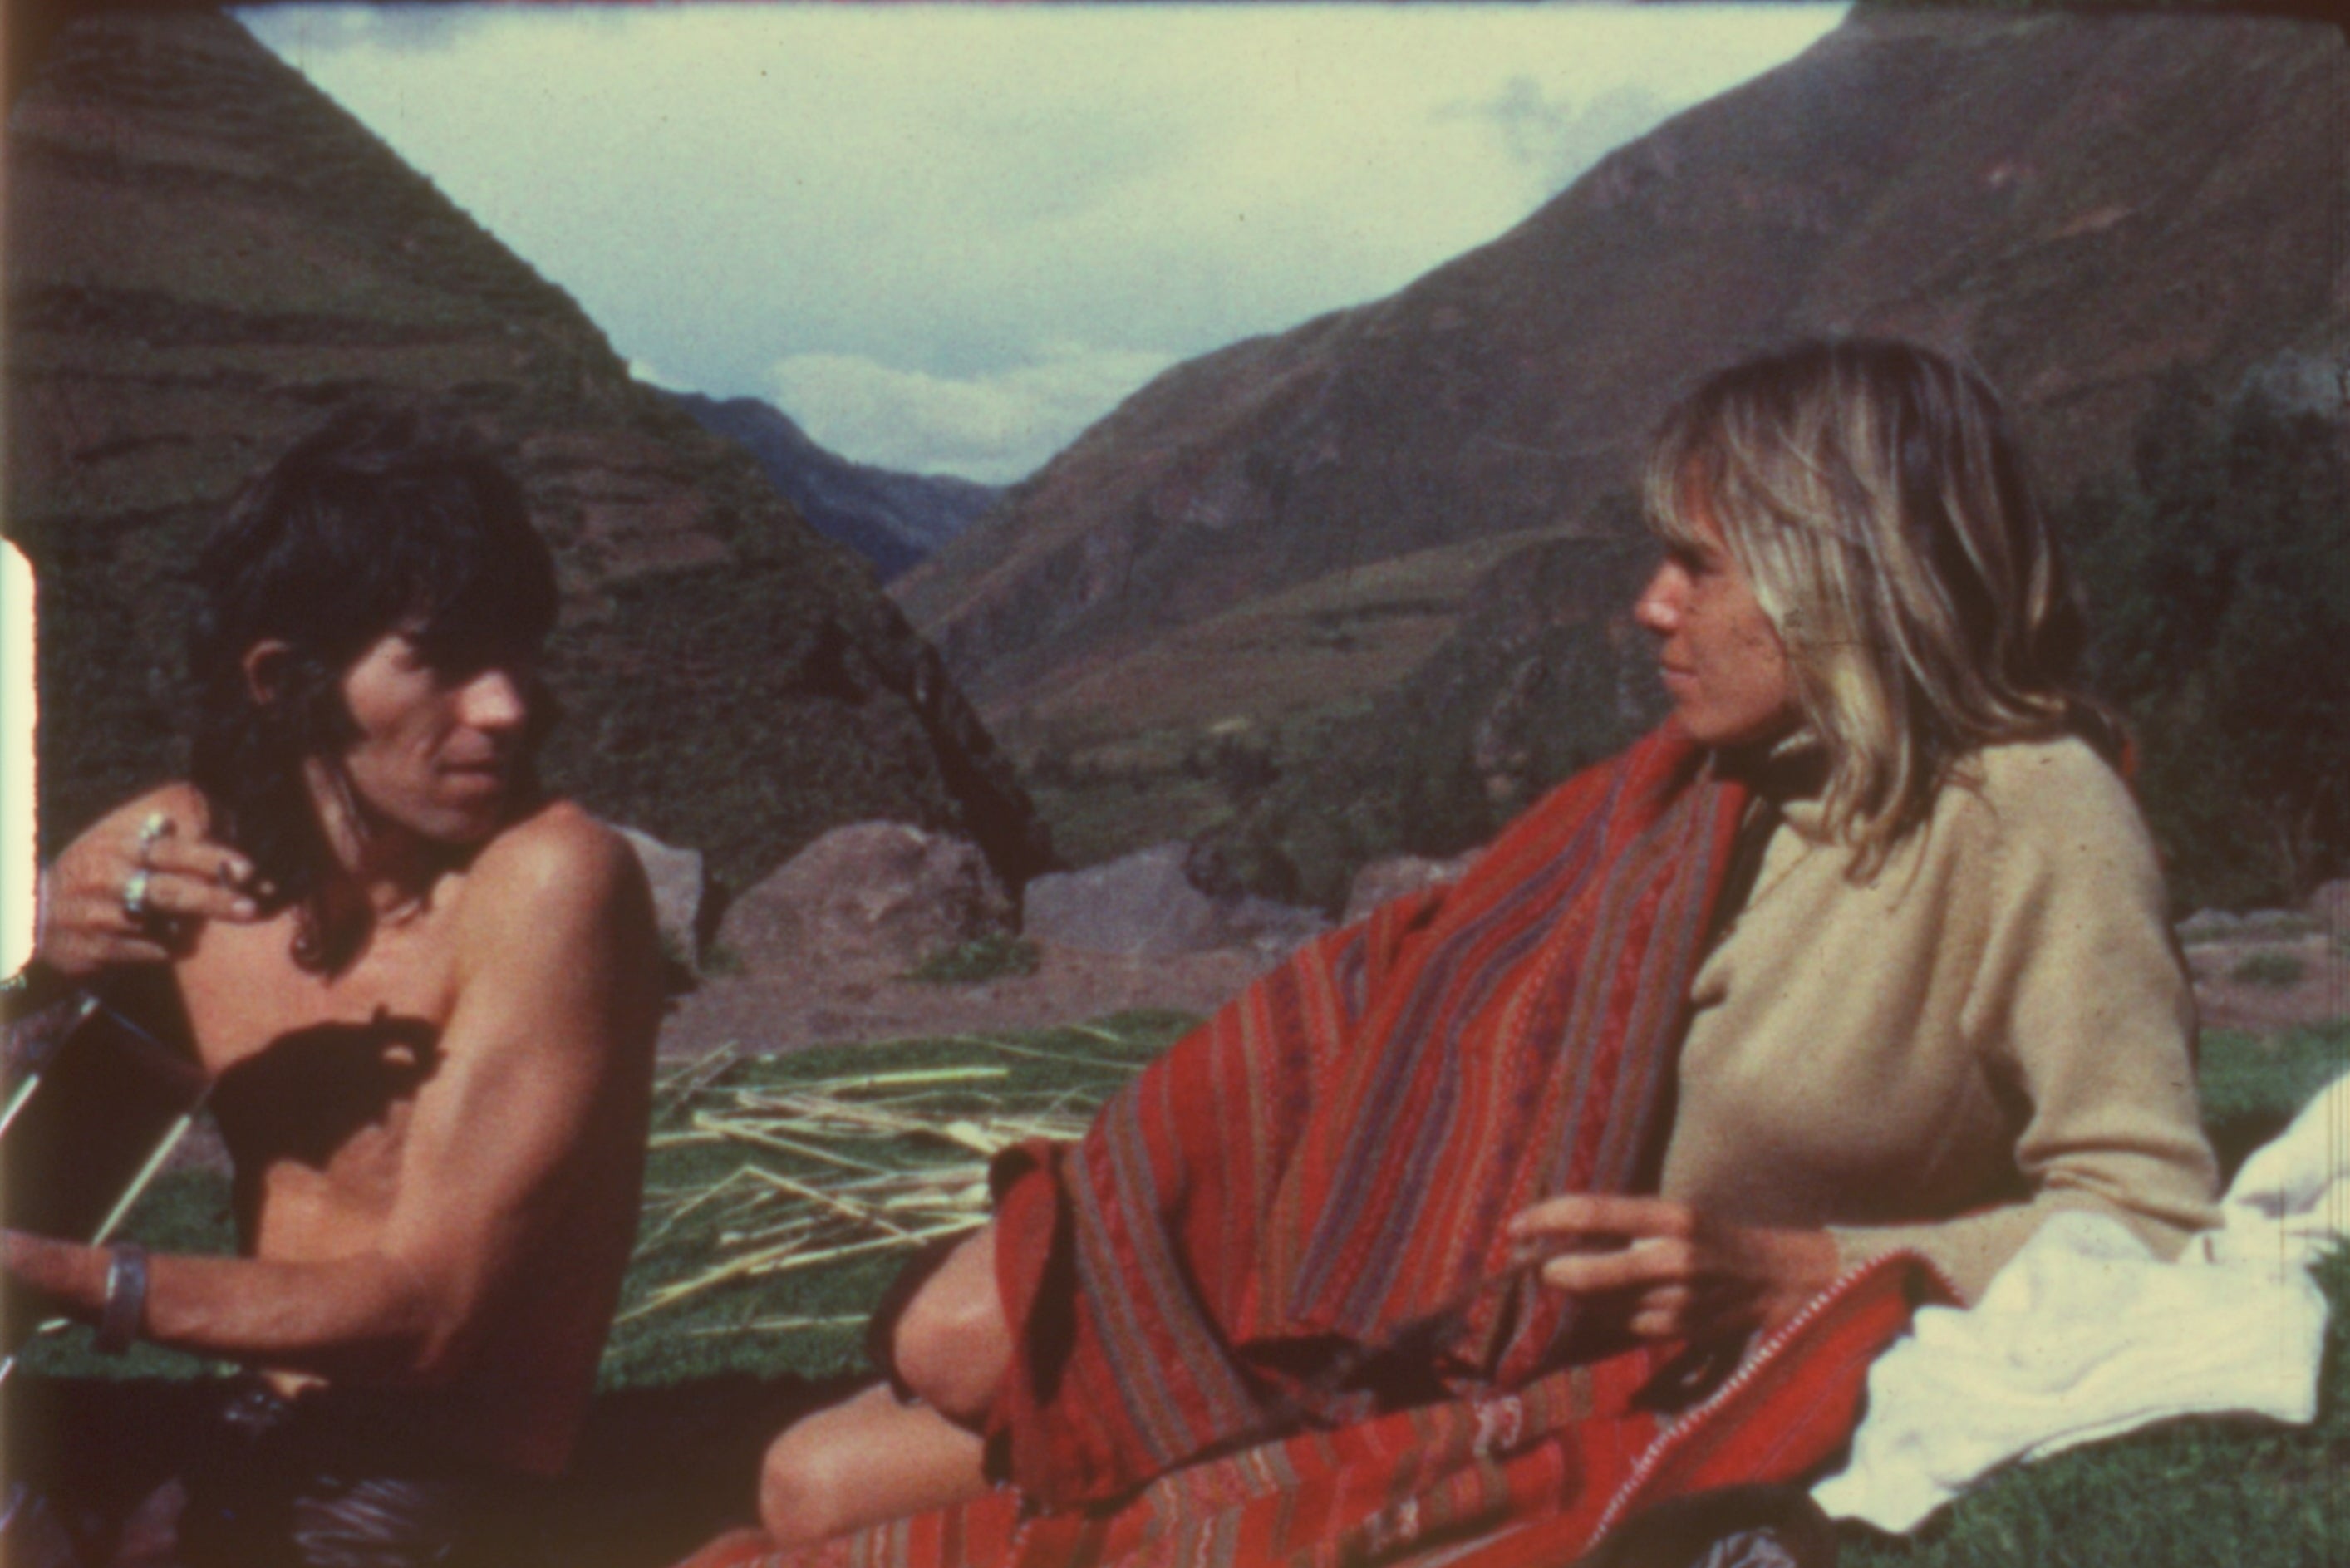 Keith Richards and Anita Pallenberg